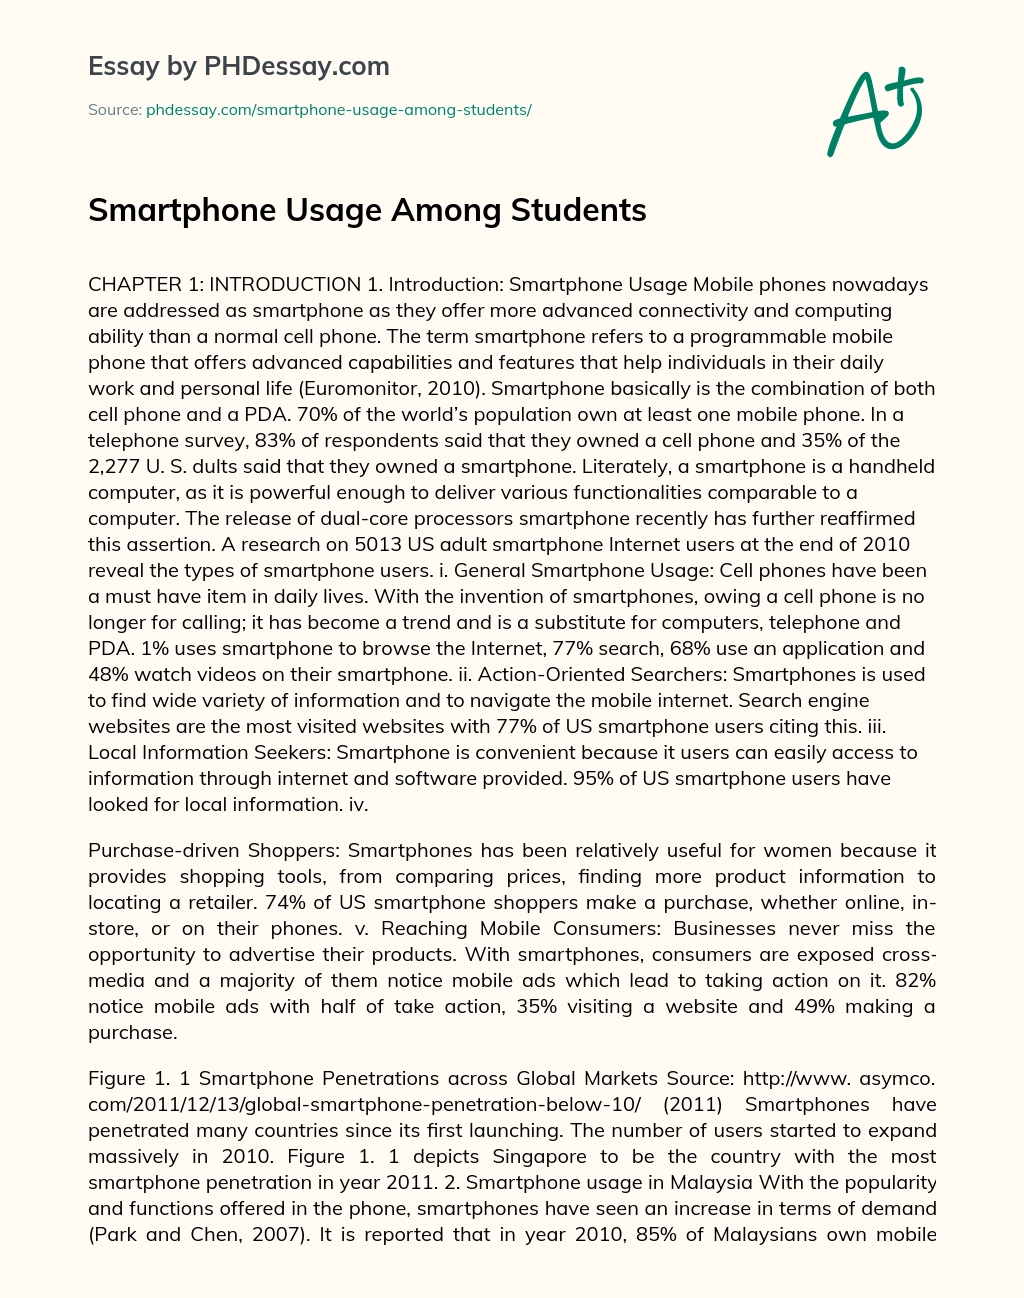 Smartphone Usage Among Students essay